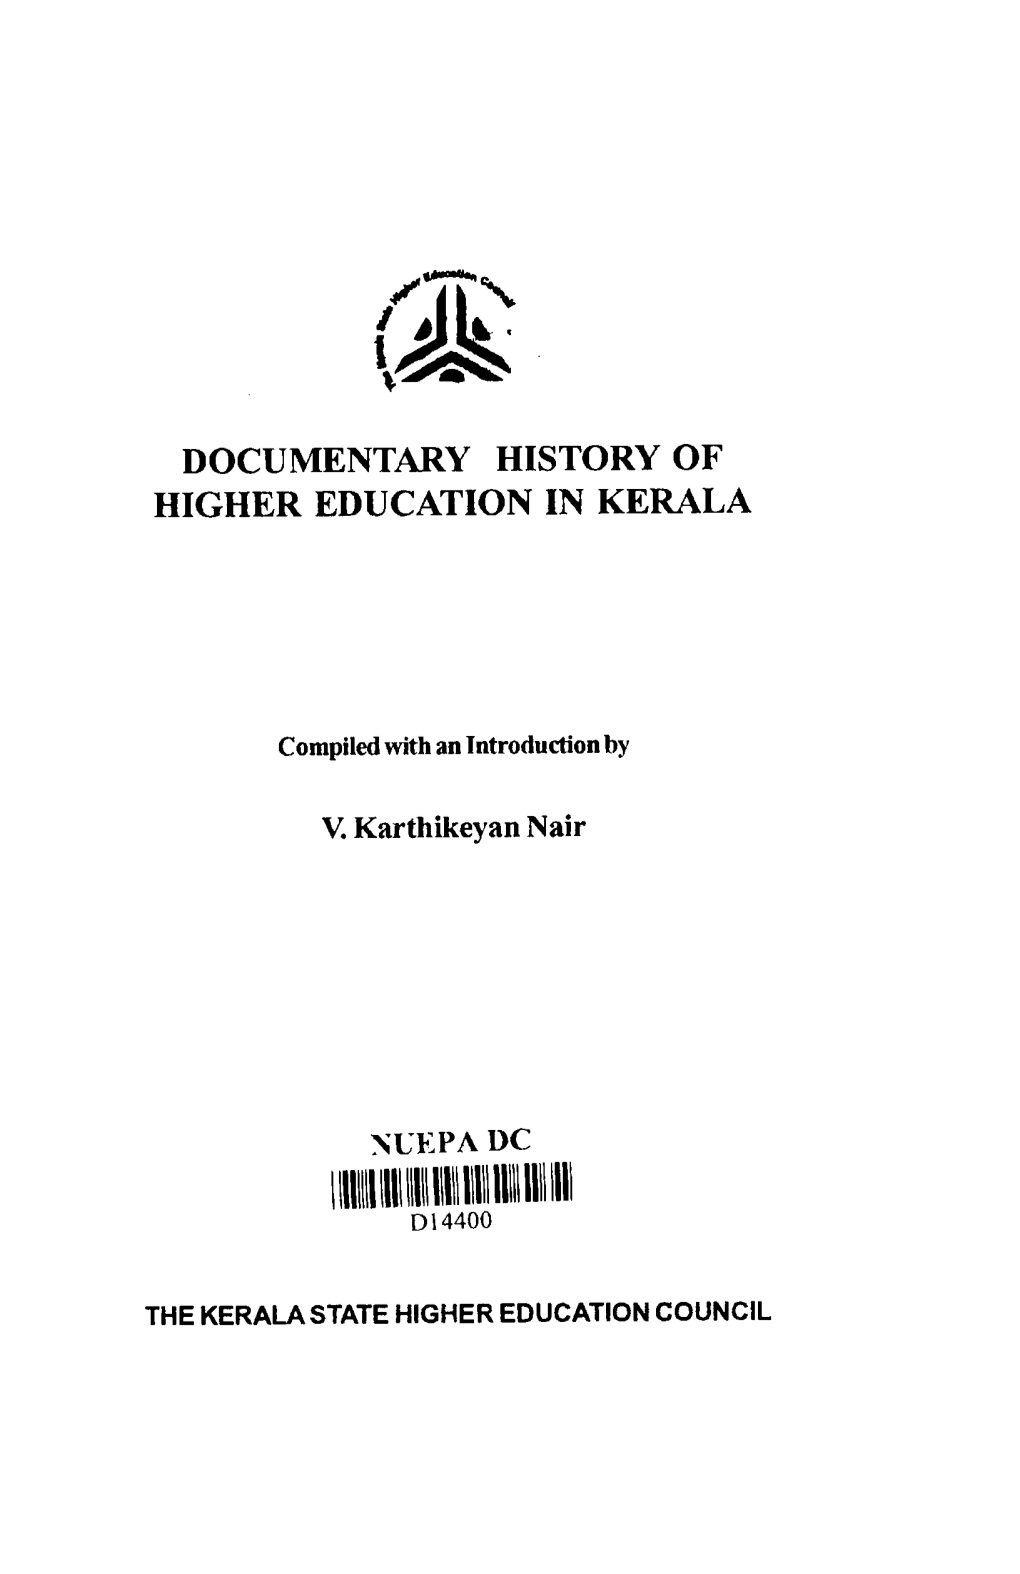 Documentary History of Higher Education in Kerala